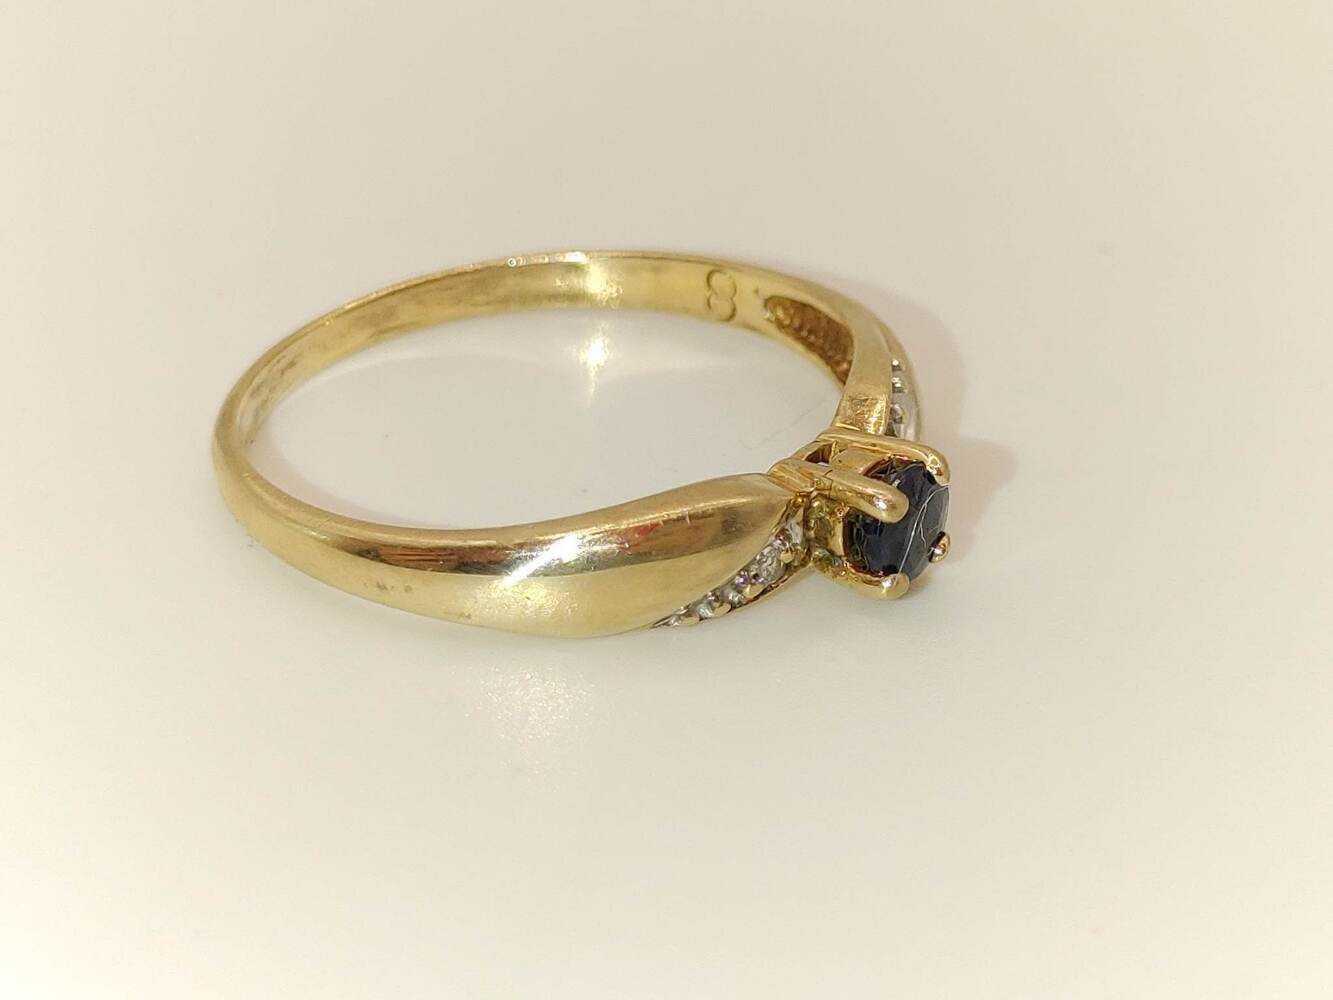 Lady's 10 Karat Yellow Gold Ring with Dark Blue Stone